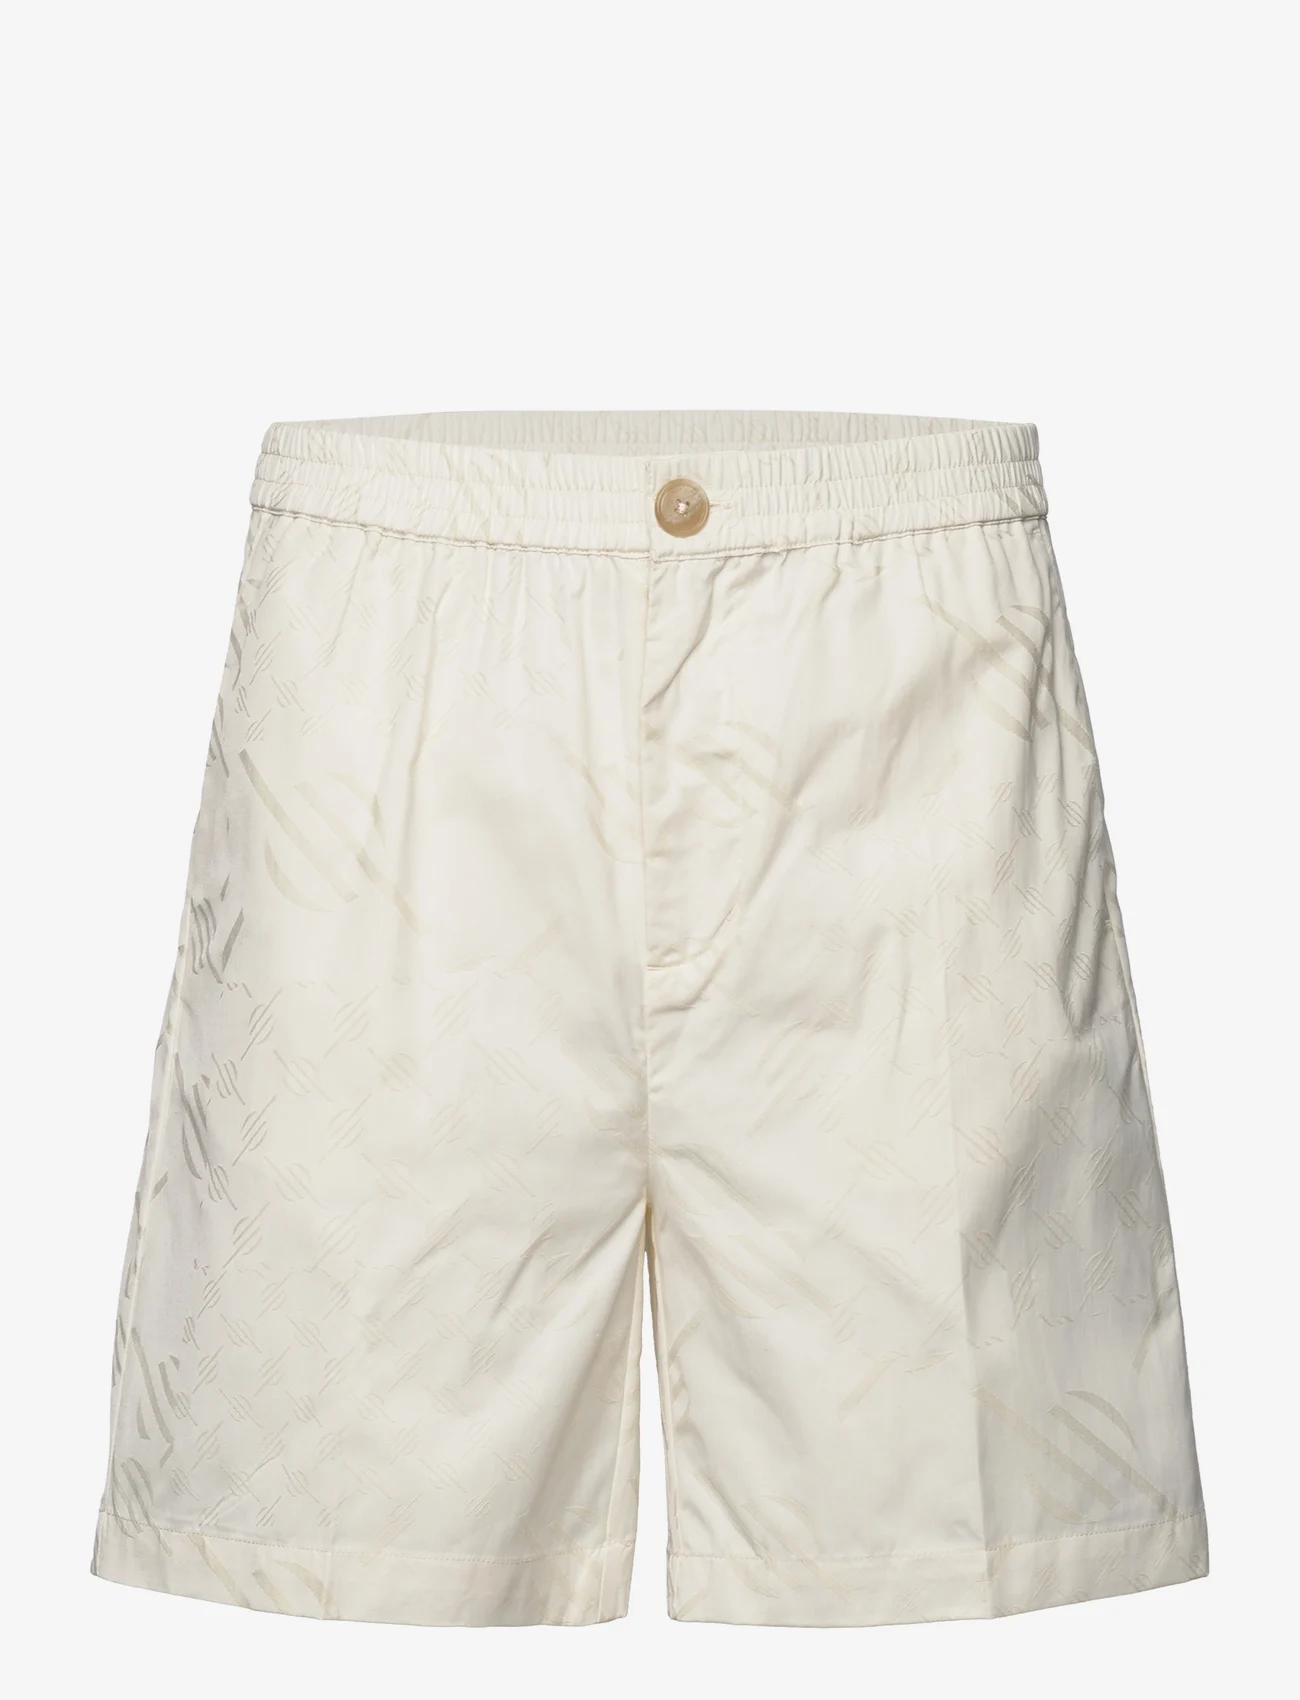 Daily Paper - piam shorts - chino lühikesed püksid - egret white - 0